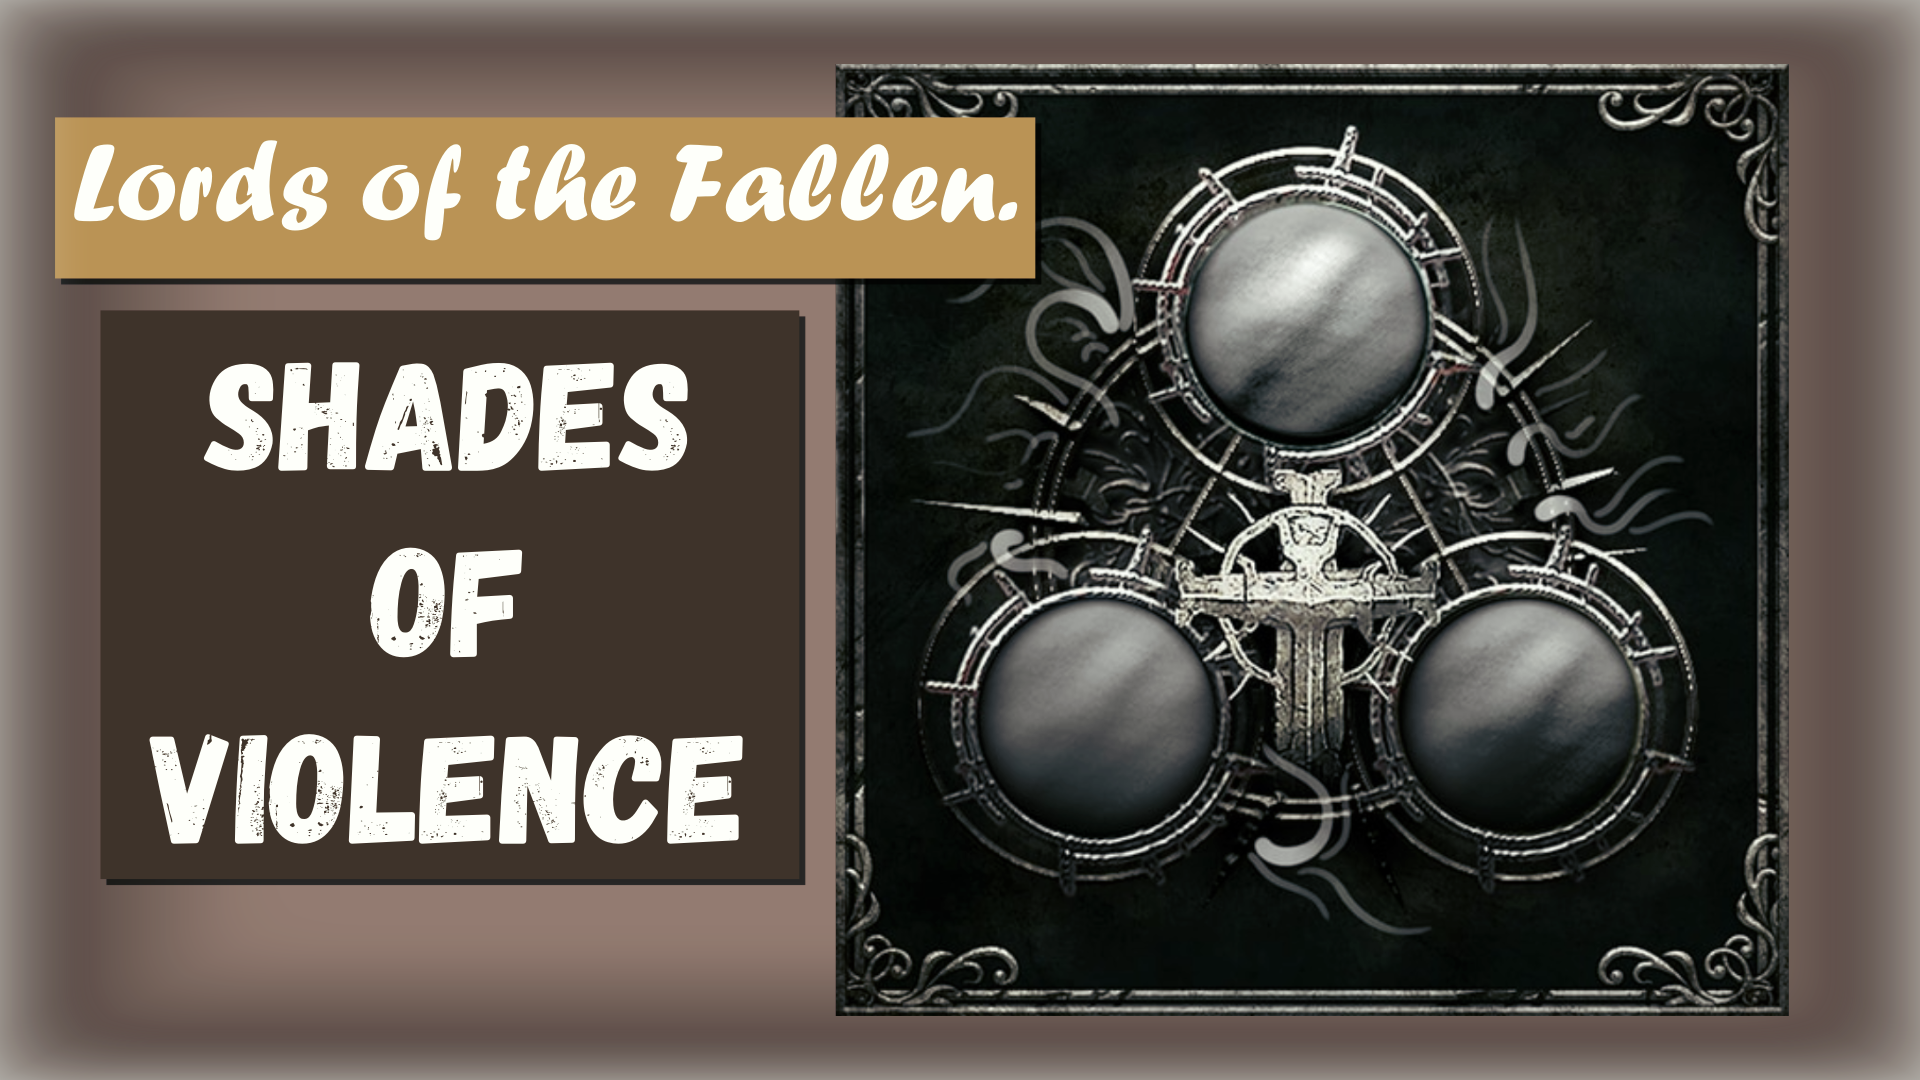 Lords of the Fallen. Трофей " Shades of Violence " Нанести настойку на деталь оборудования.